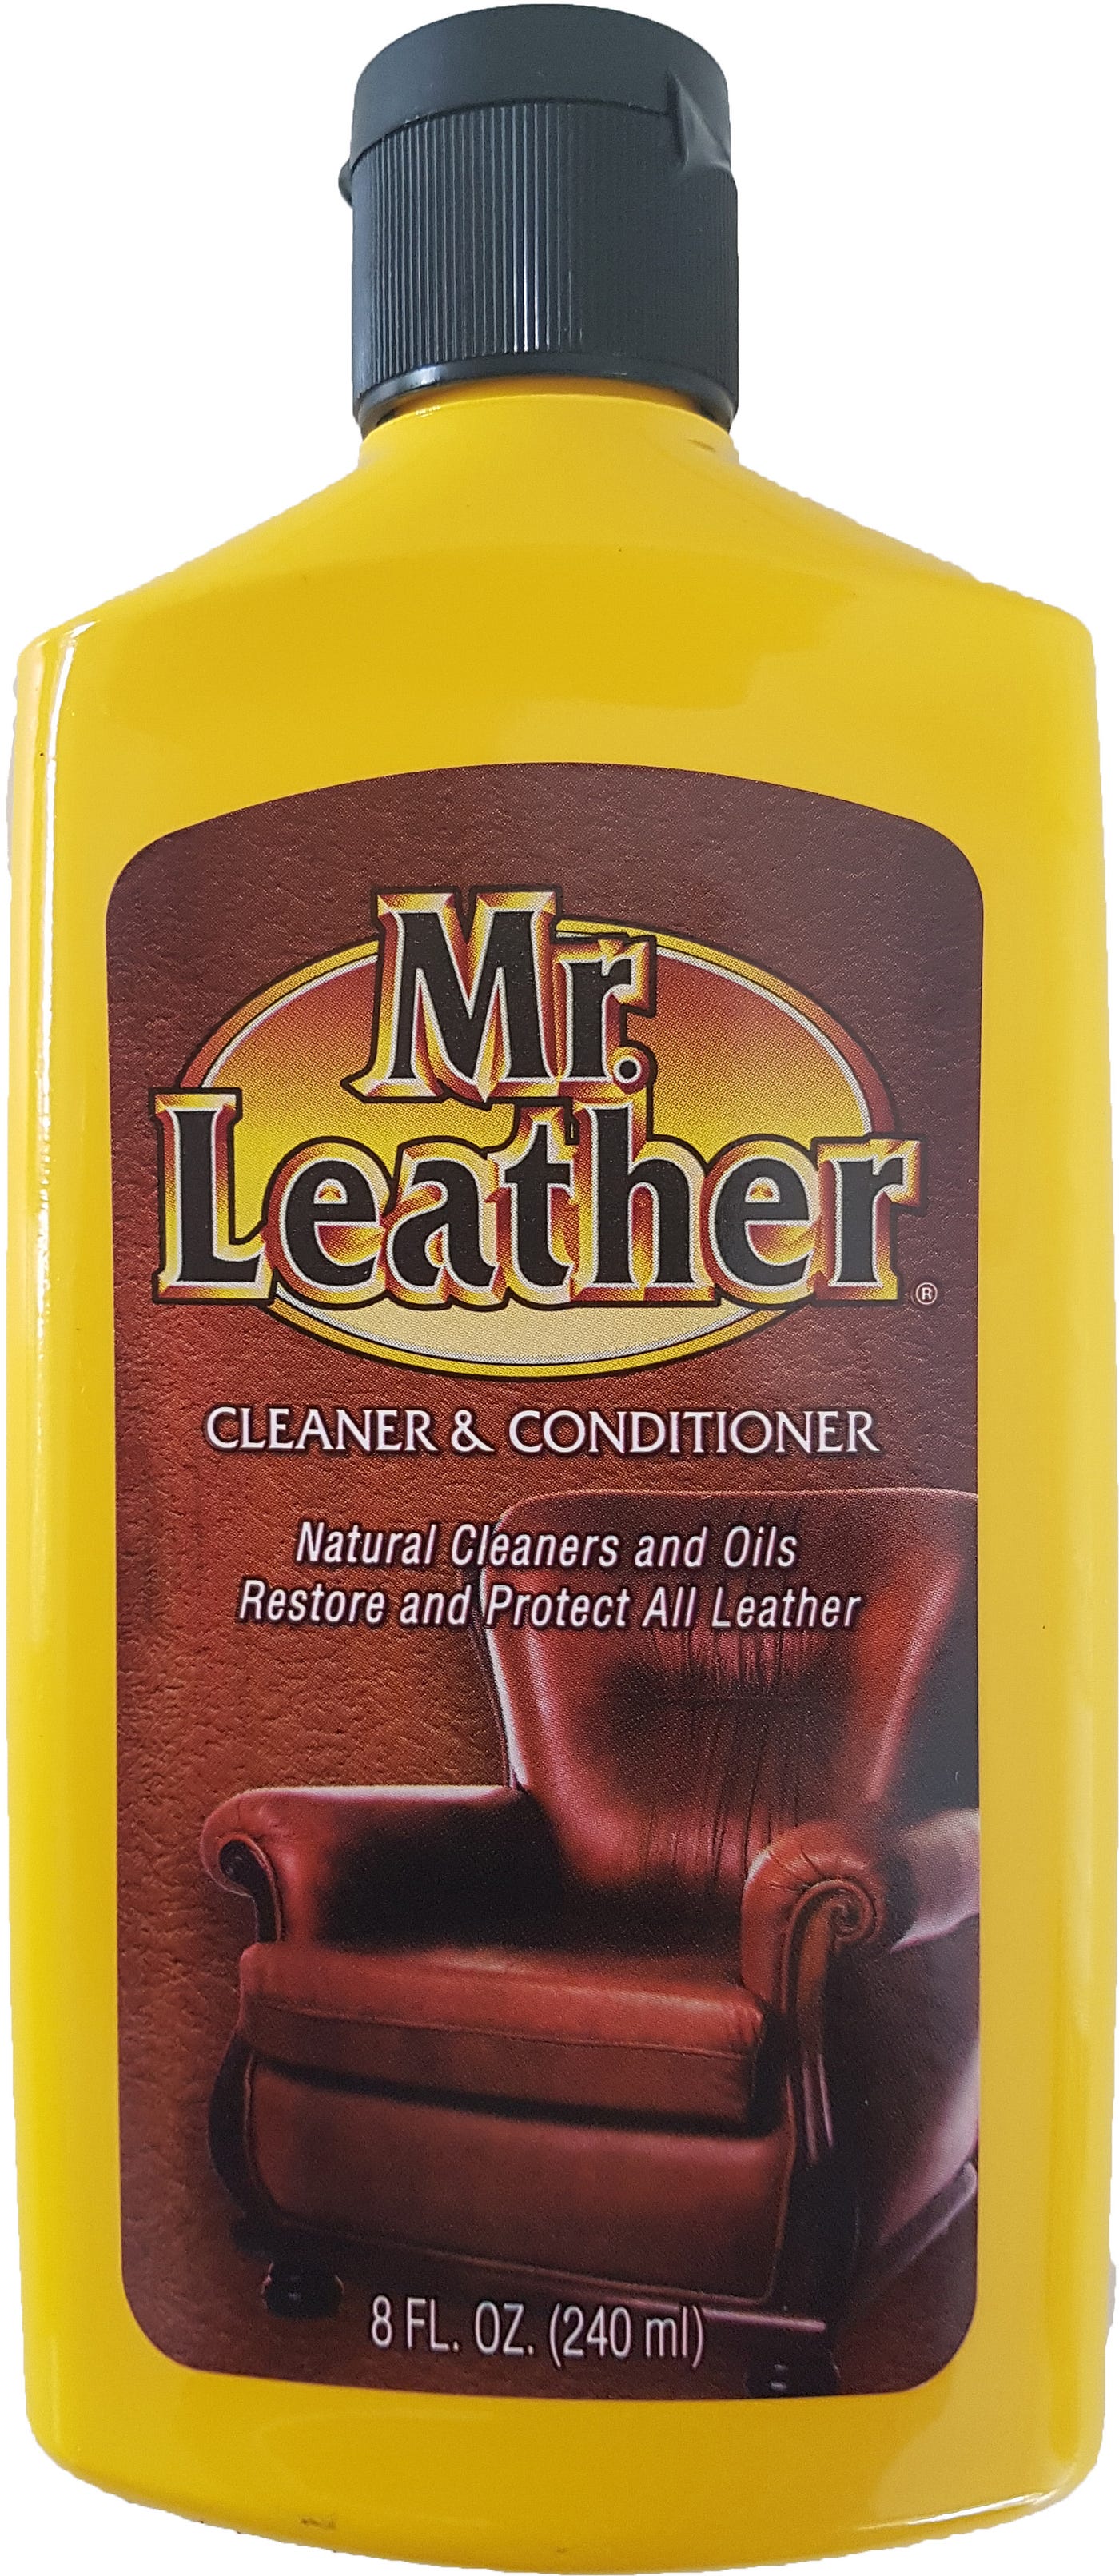 Leather restorer recommendations? : r/Detailing